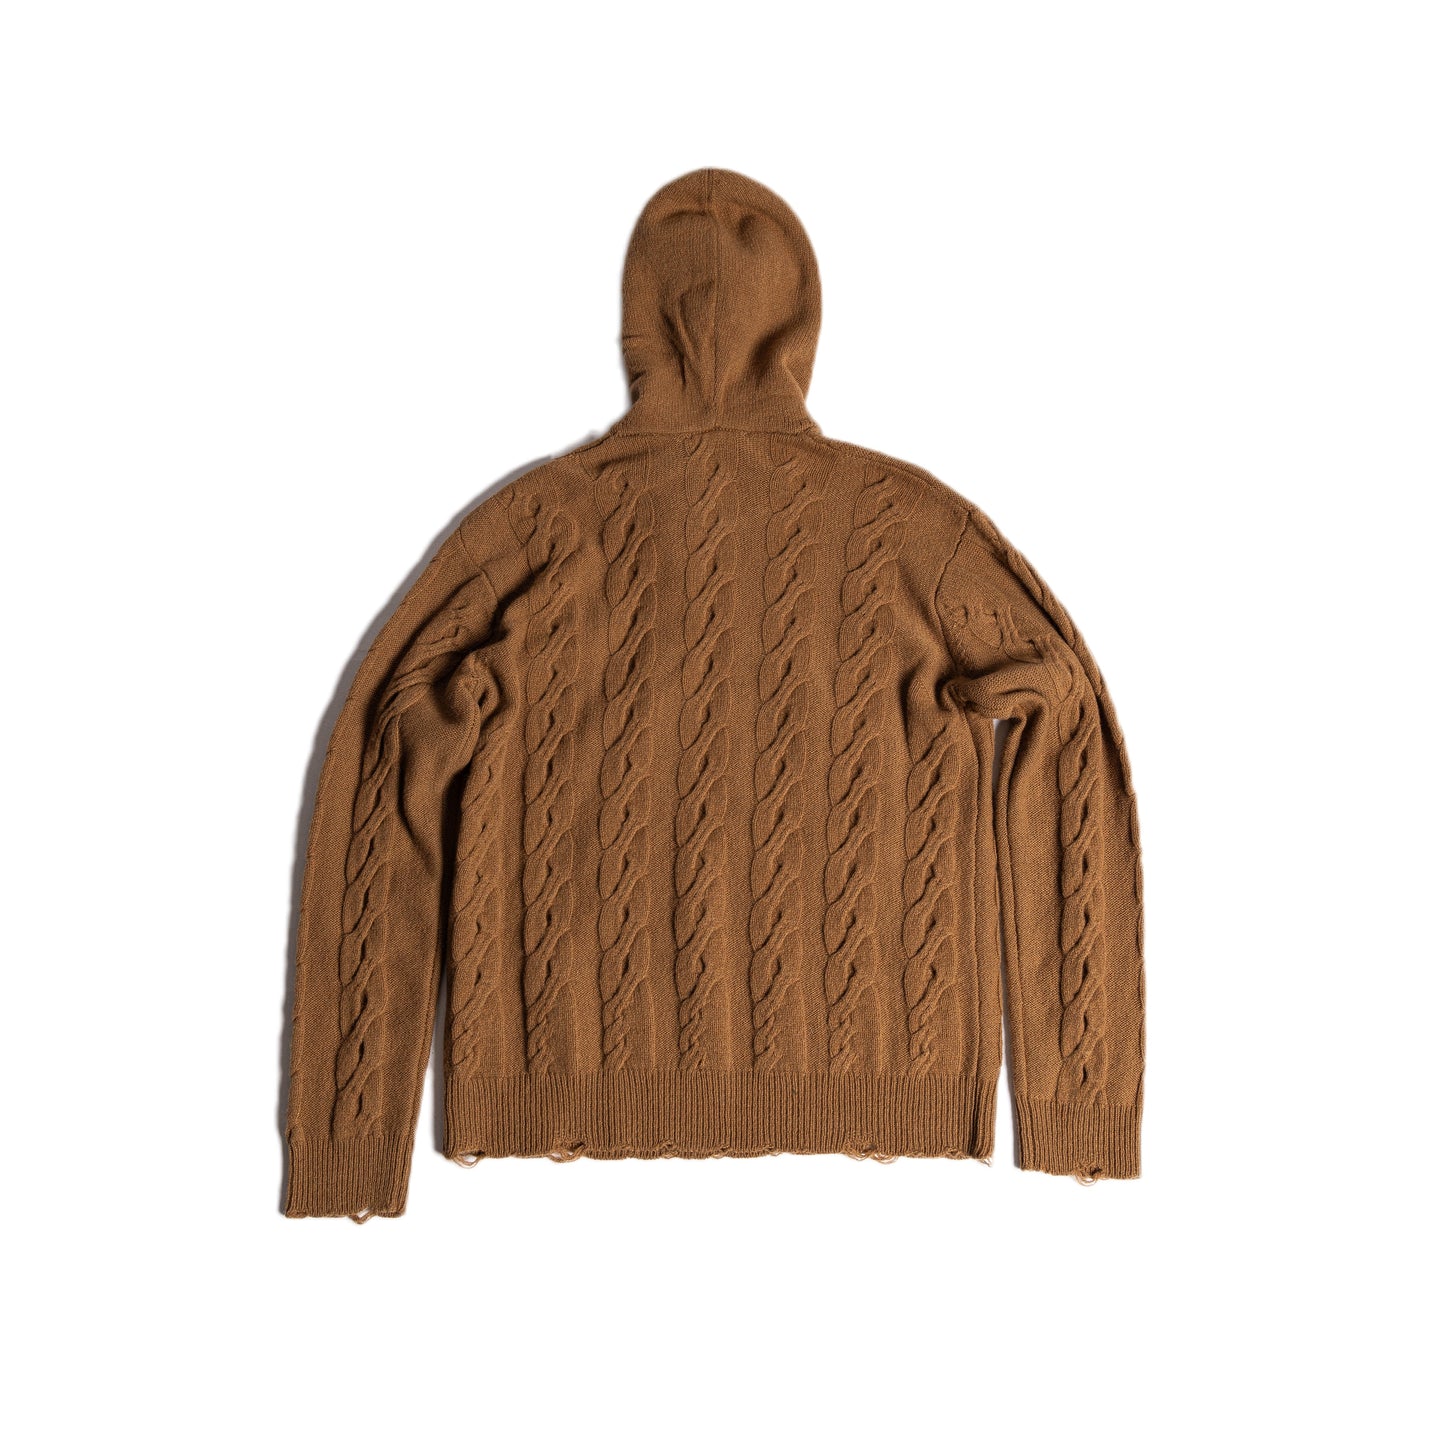 ATOMO Knit Hooded Sweatshirt